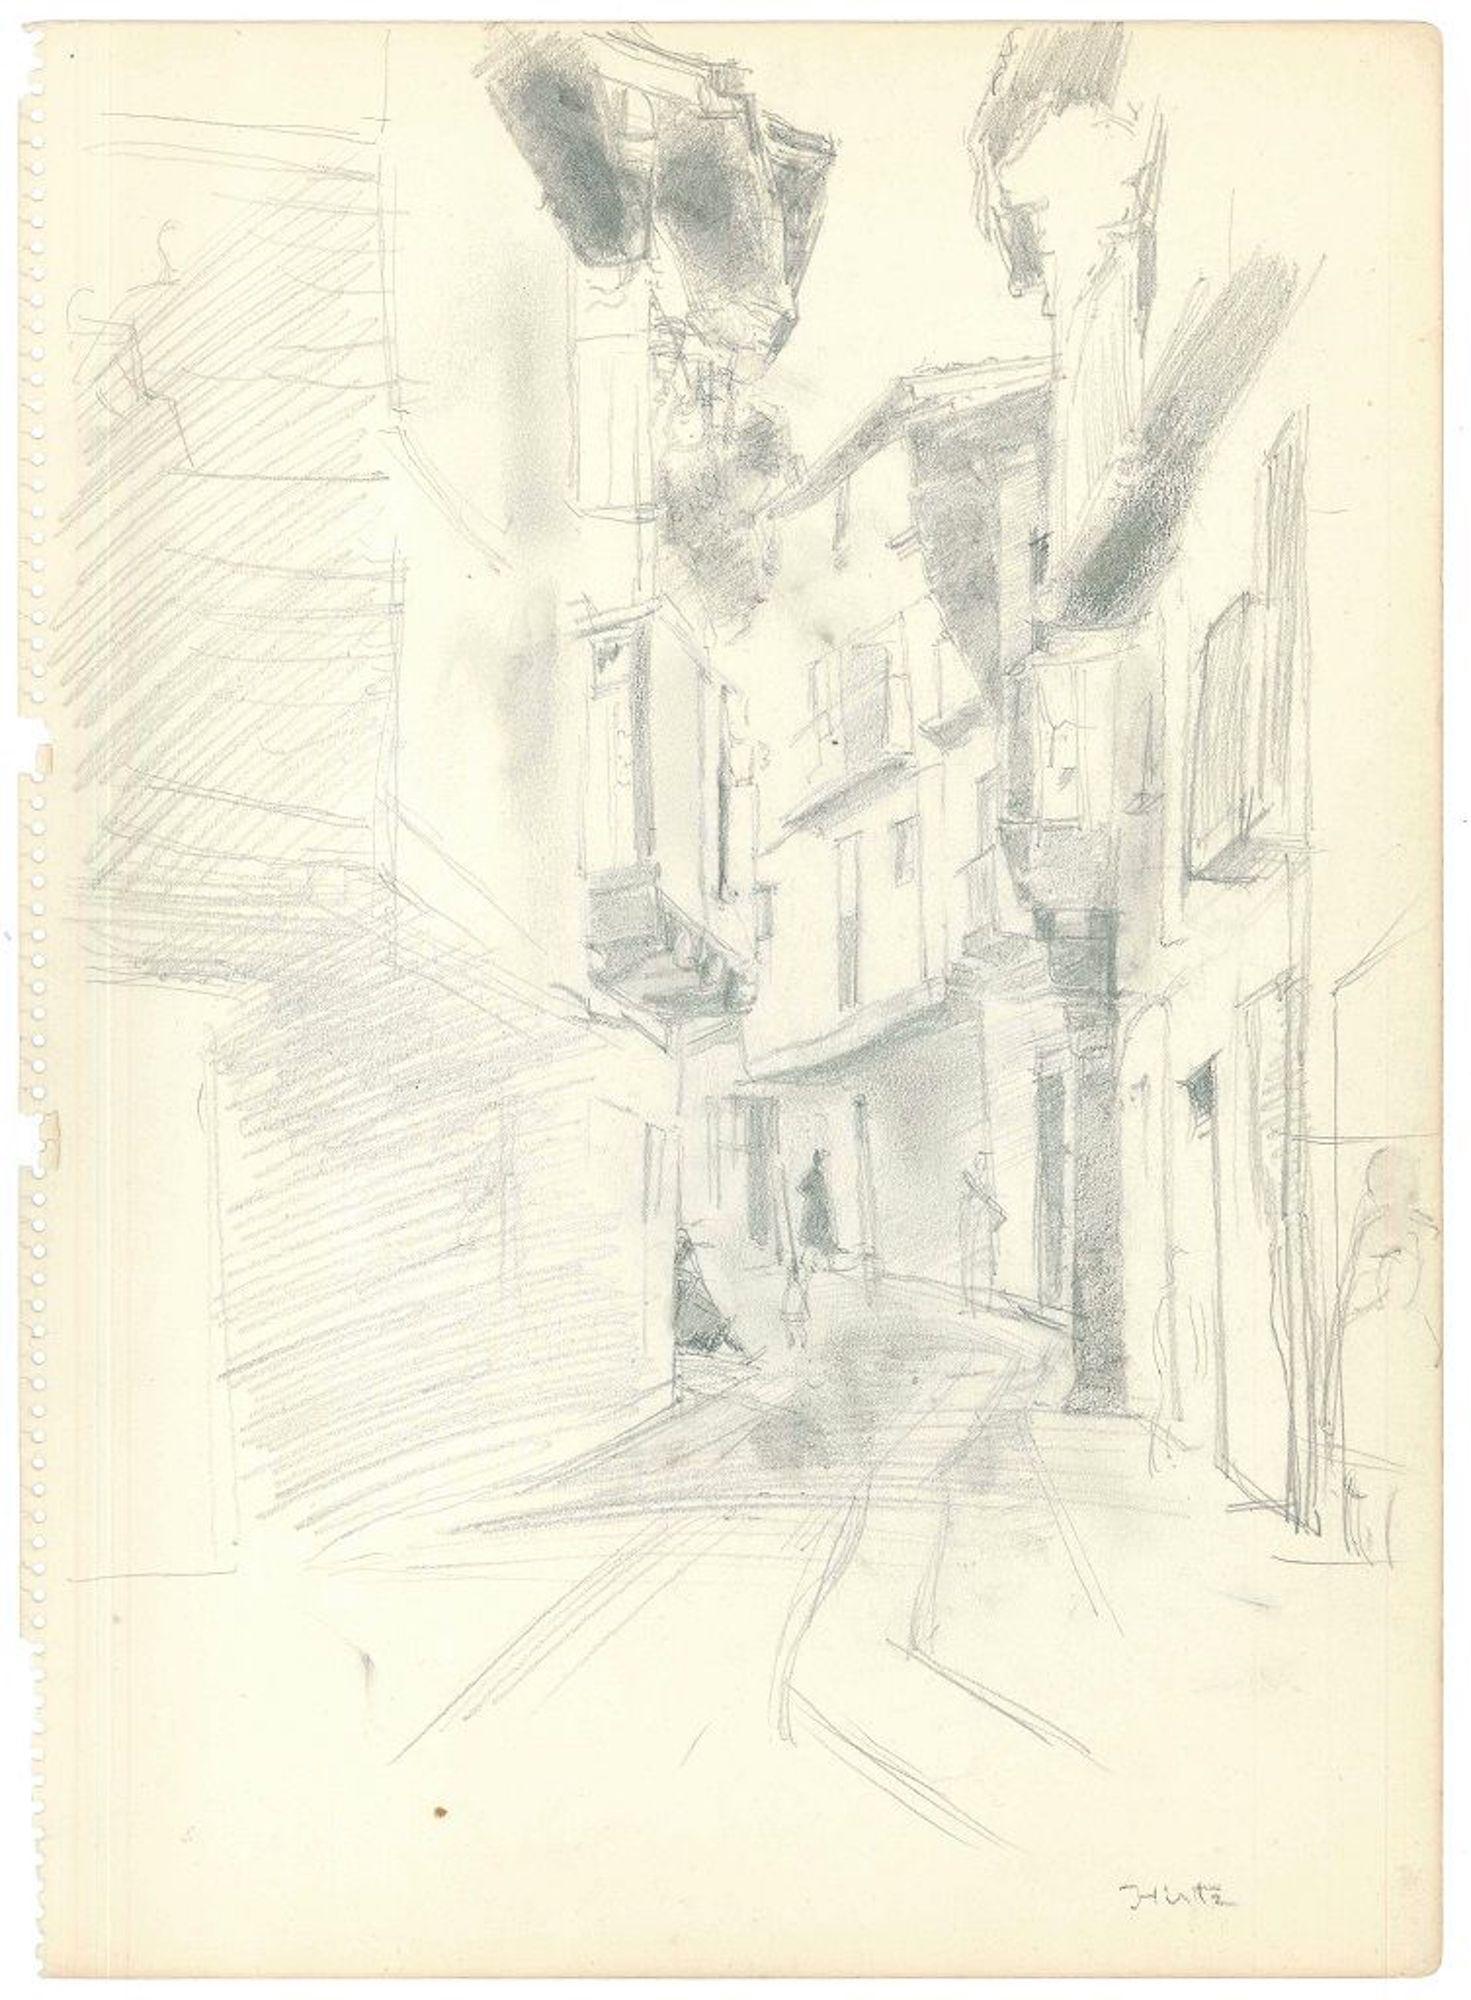 Jacques Hirtz Figurative Art - Narrow Lane - Original Pencil Drawing on Paper by J. Hirtz - Mid 20th Century